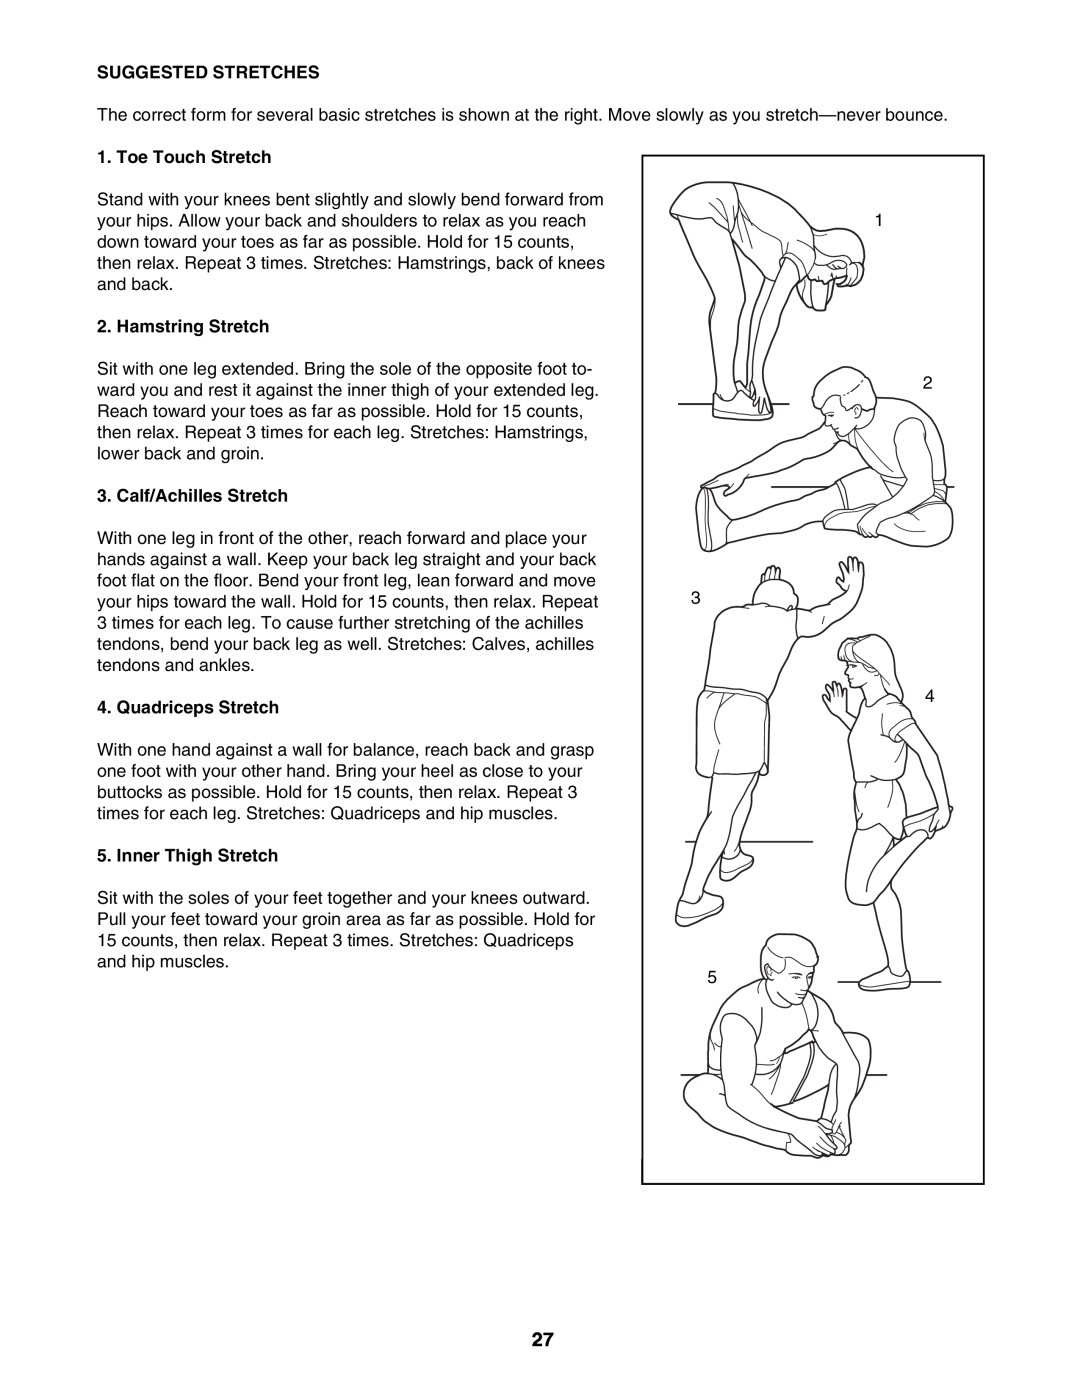 ProForm PFTL59023 Suggested Stretches, Toe Touch Stretch, Hamstring Stretch, Calf/Achilles Stretch, Quadriceps Stretch 